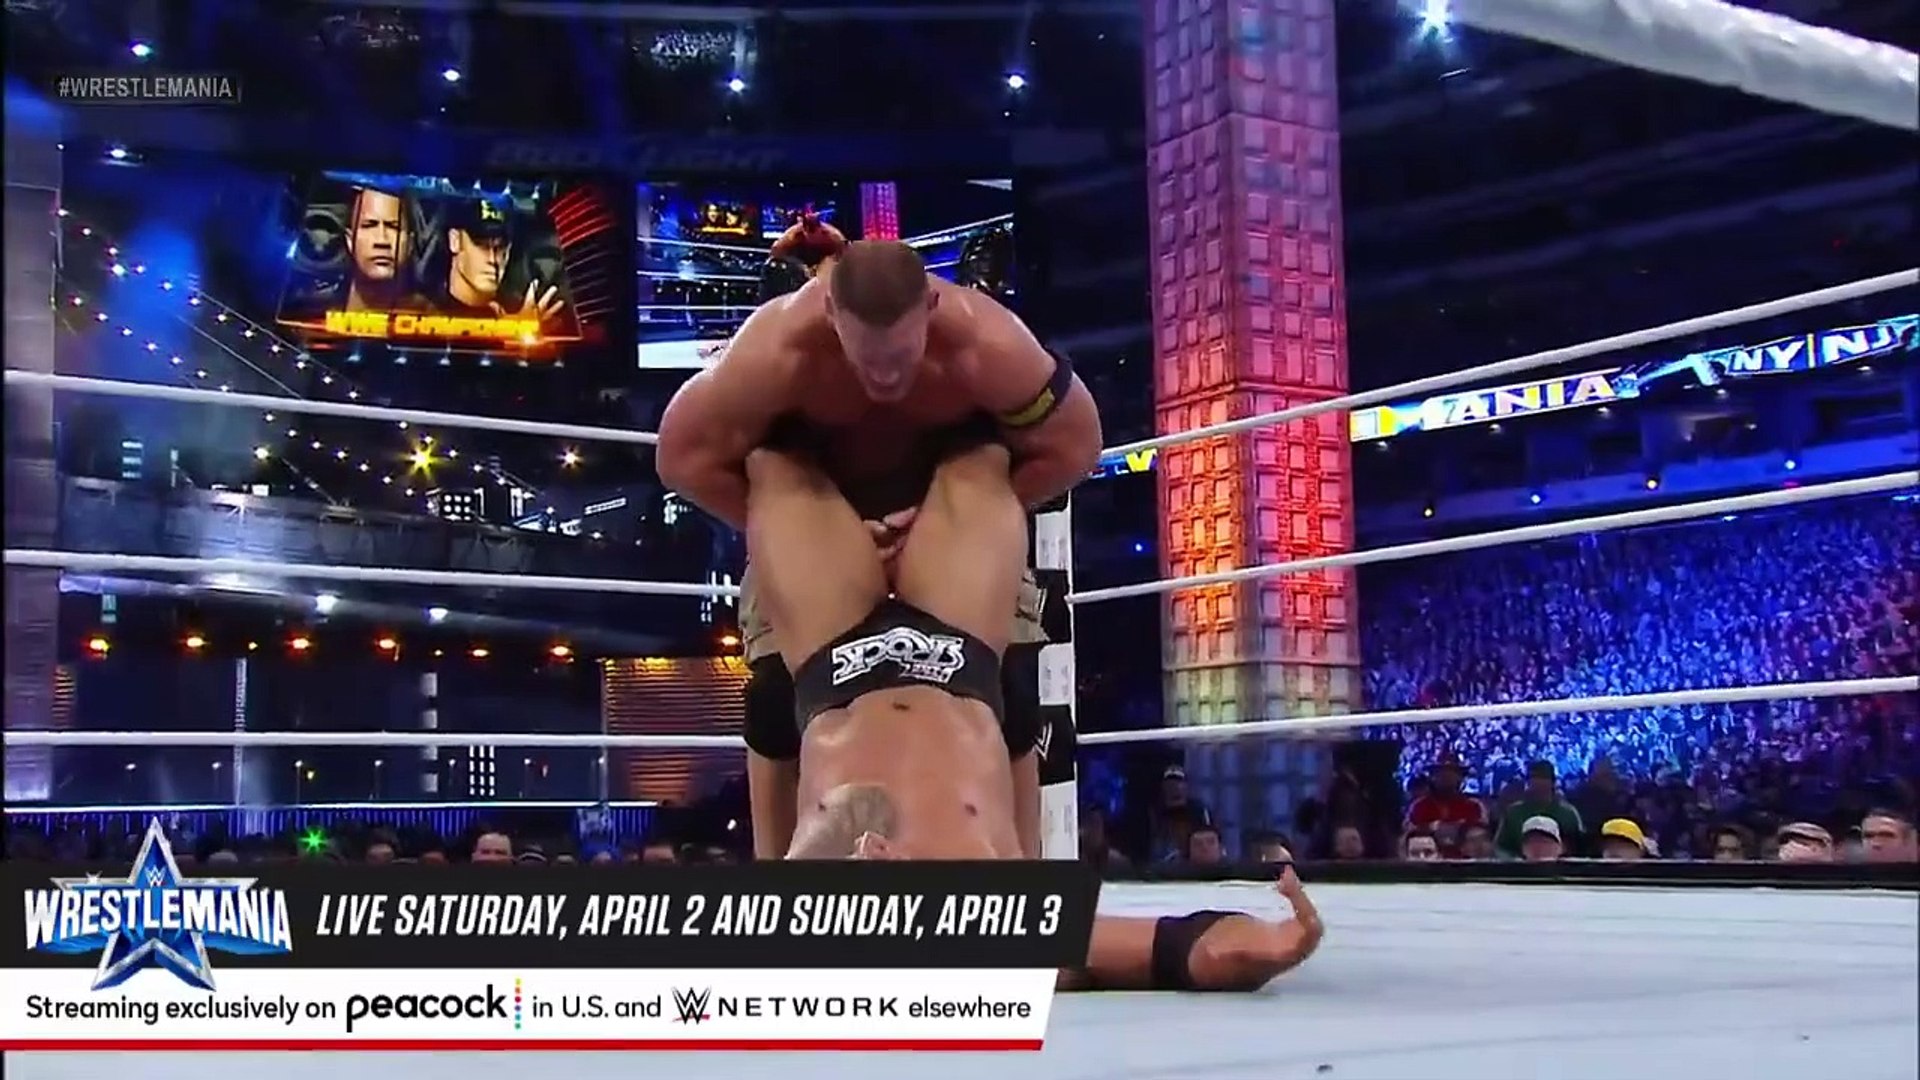 FULL MATCH - The Rock vs. John Cena | WrestleMania 29 - video Dailymotion